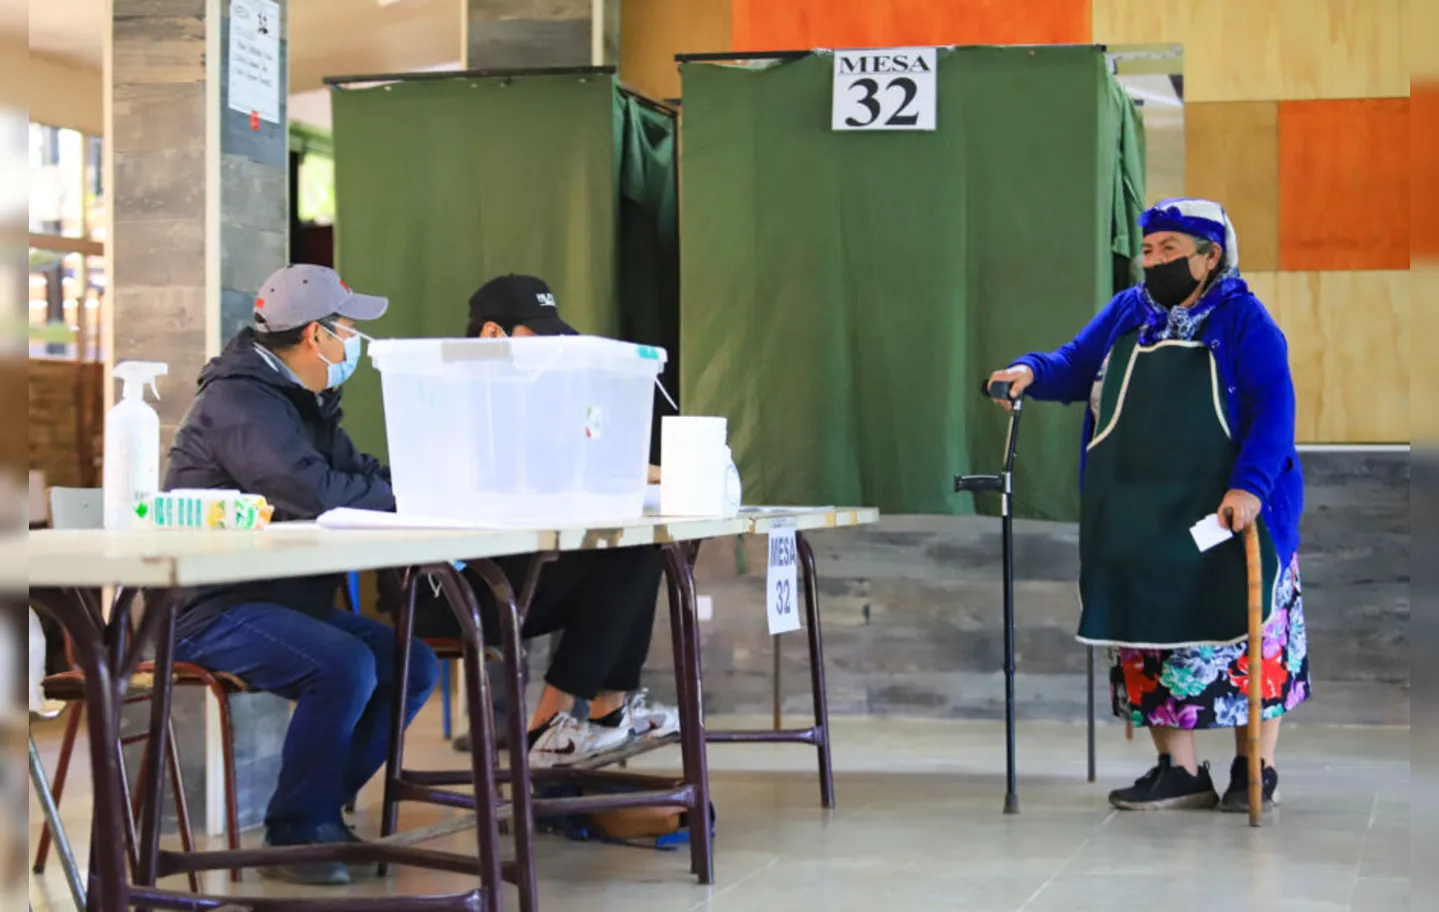 Chilenos escolhem novo presidente hoje